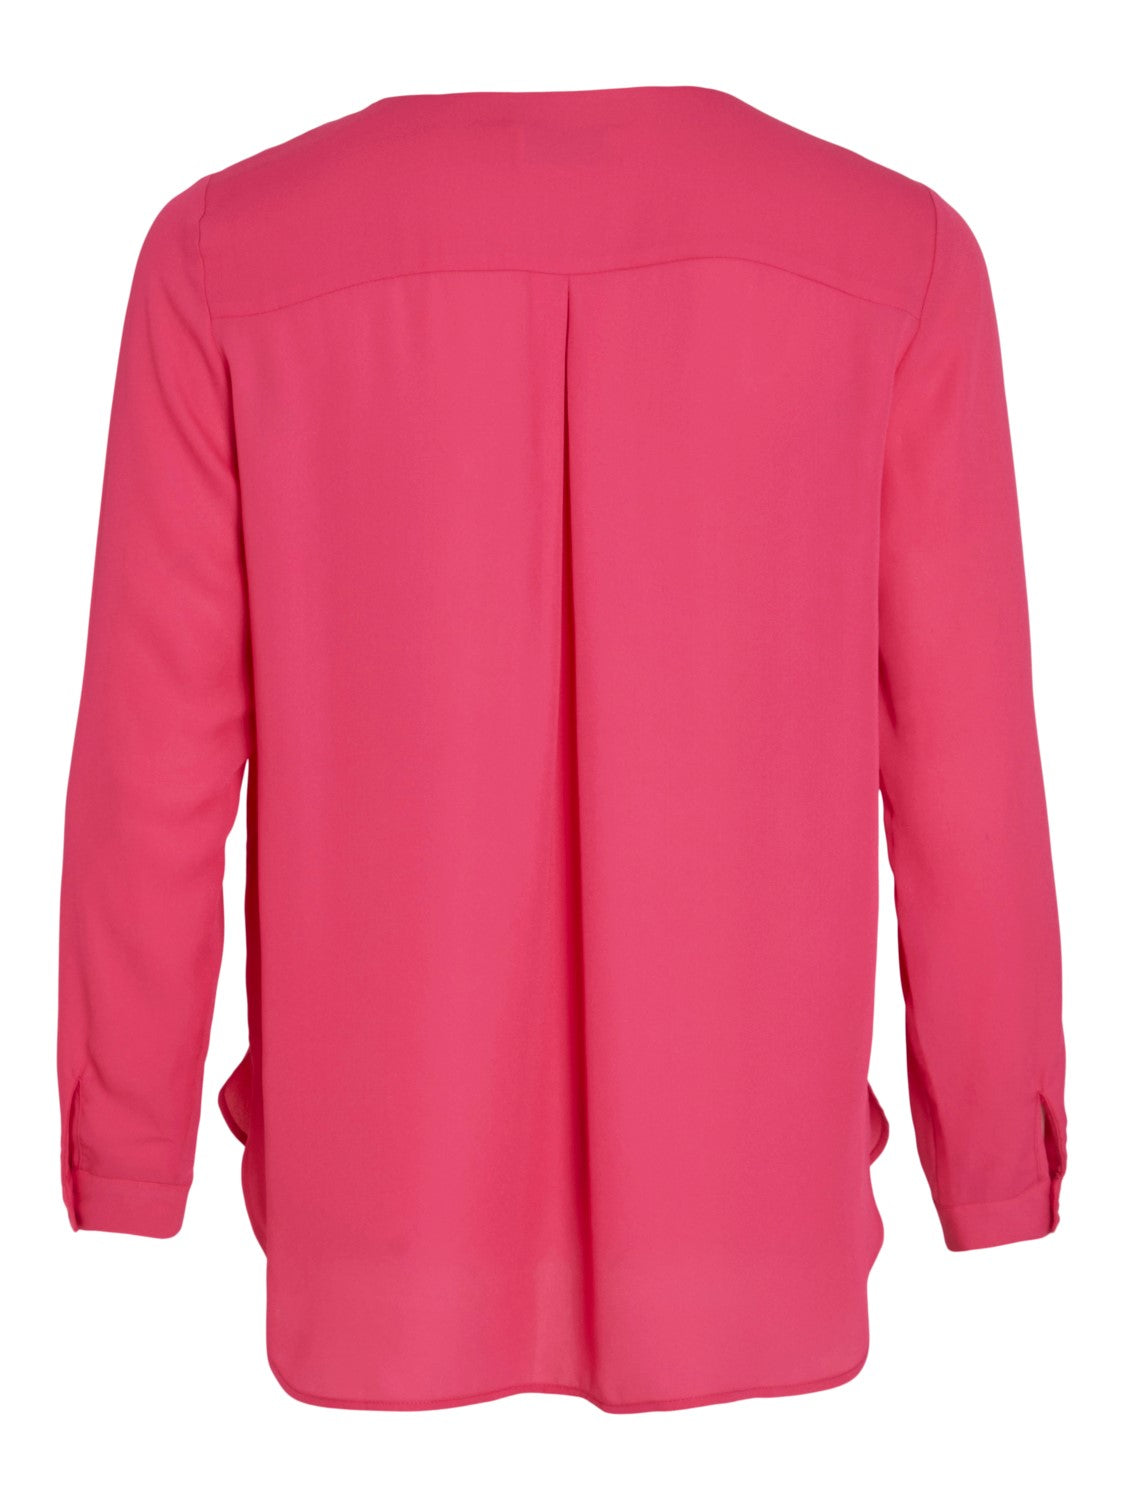 Loucy Shirt (Pink Yarrow)